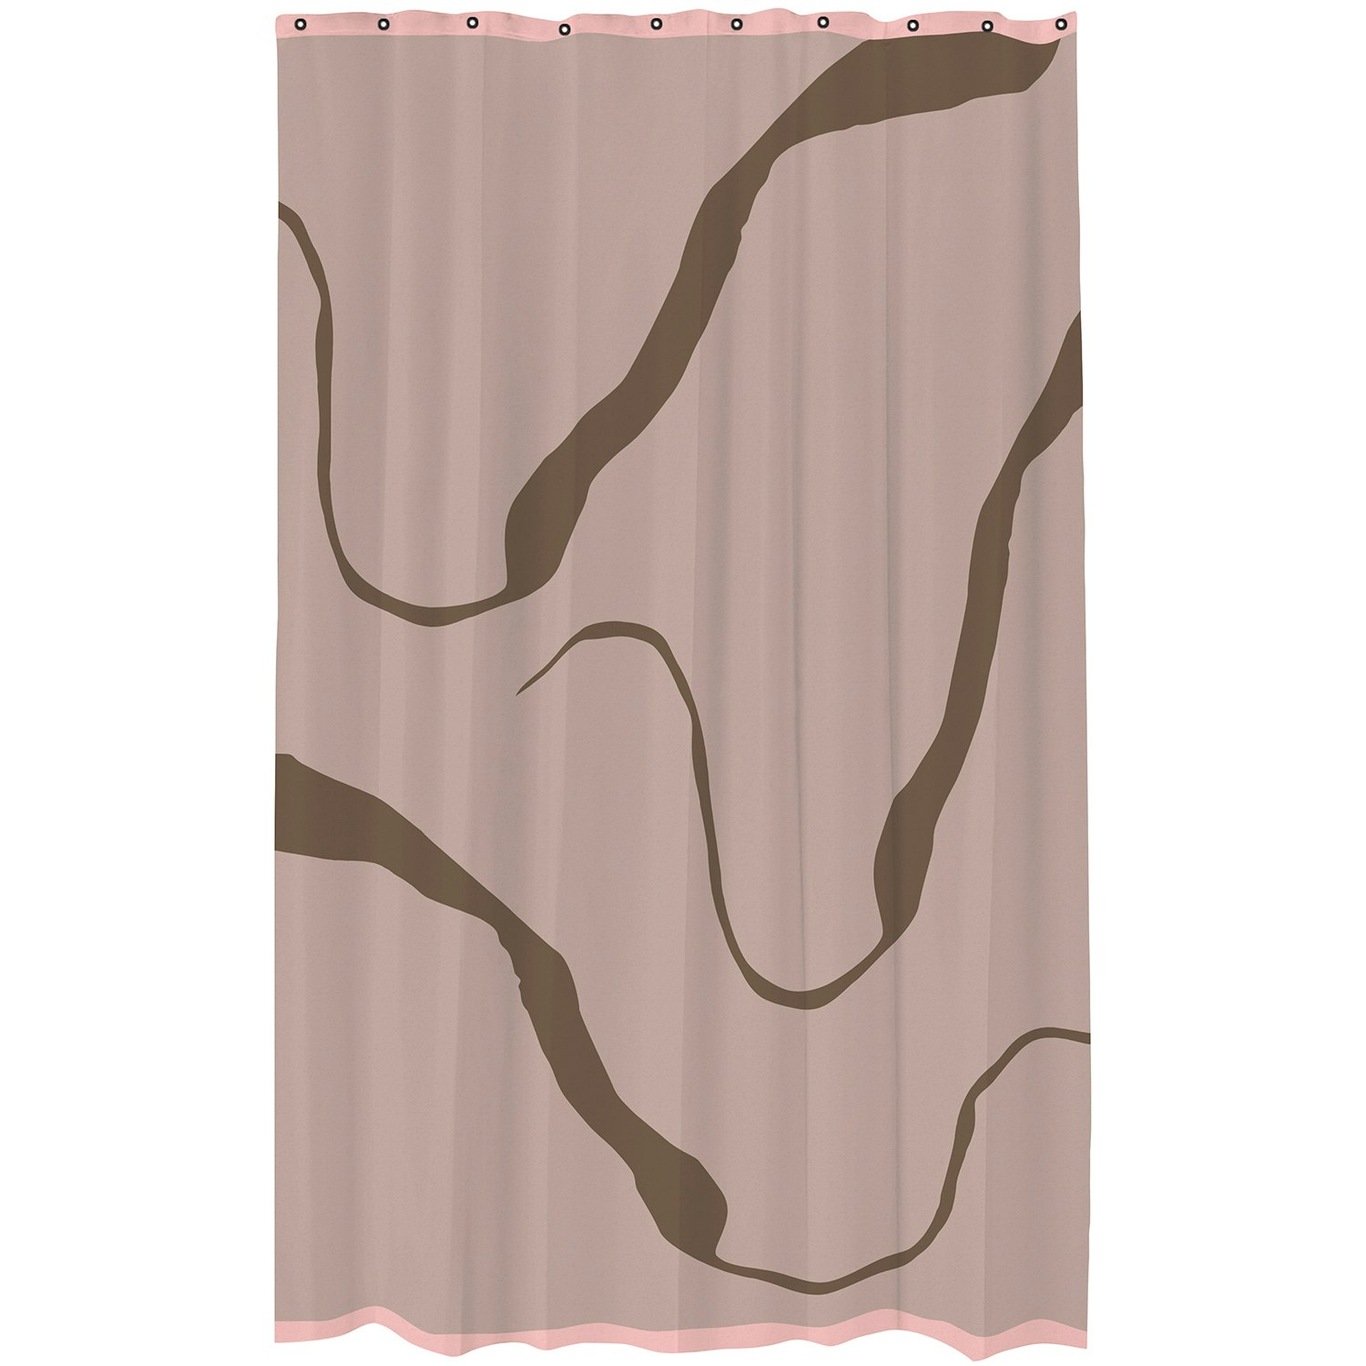 Process Shower Curtain Brown, 150x200 cm